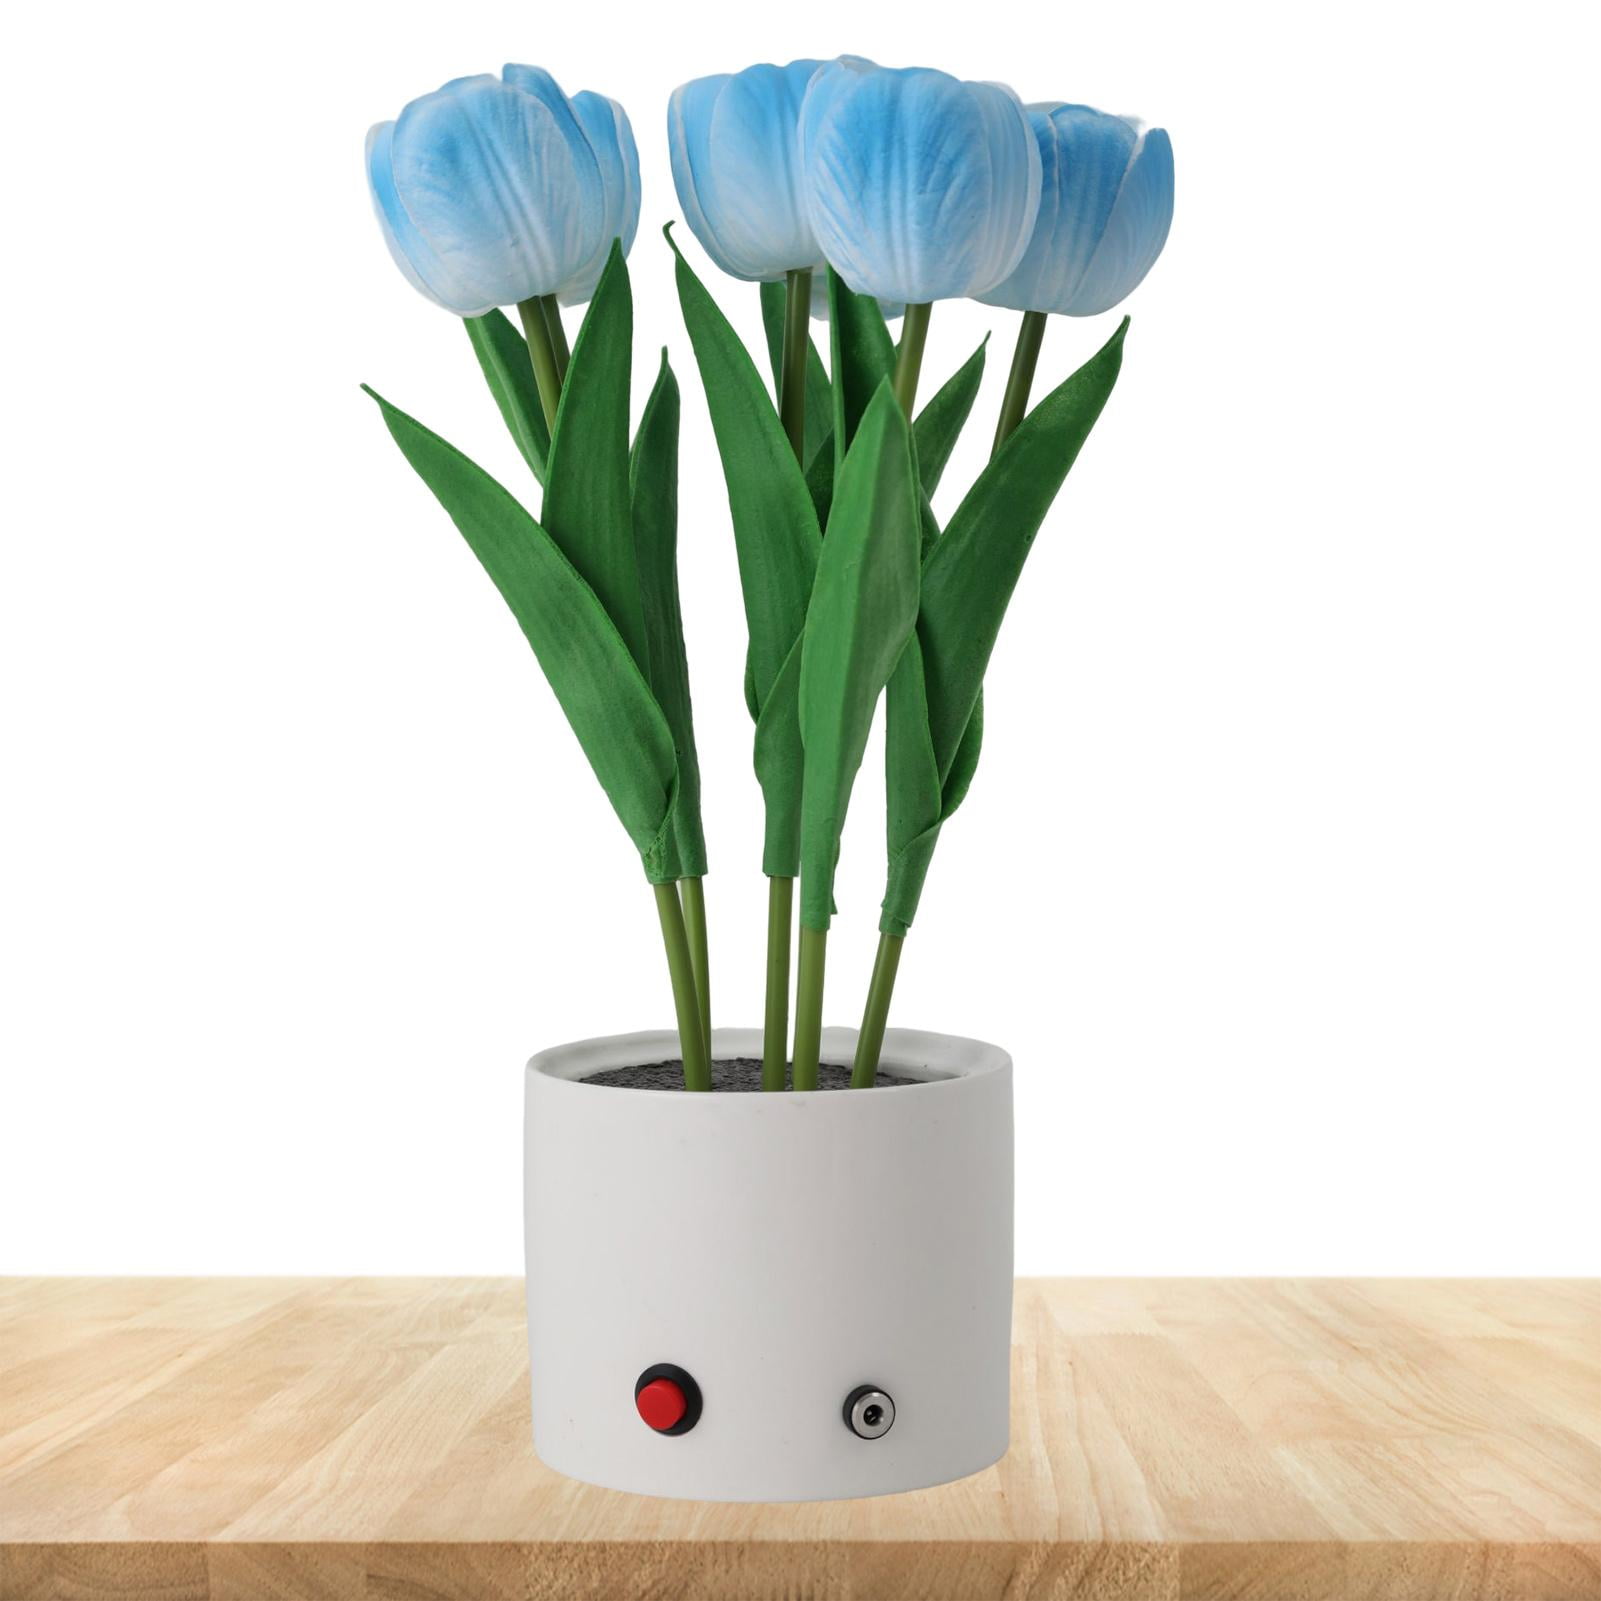 Tulip Led Flower Light | Led USB Tulips Night Light With Vase | Beautiful Six Branches Flower Lamp Flower Table Light, Light Up Flowers For Bedroom Living Room Home - Walmart.com